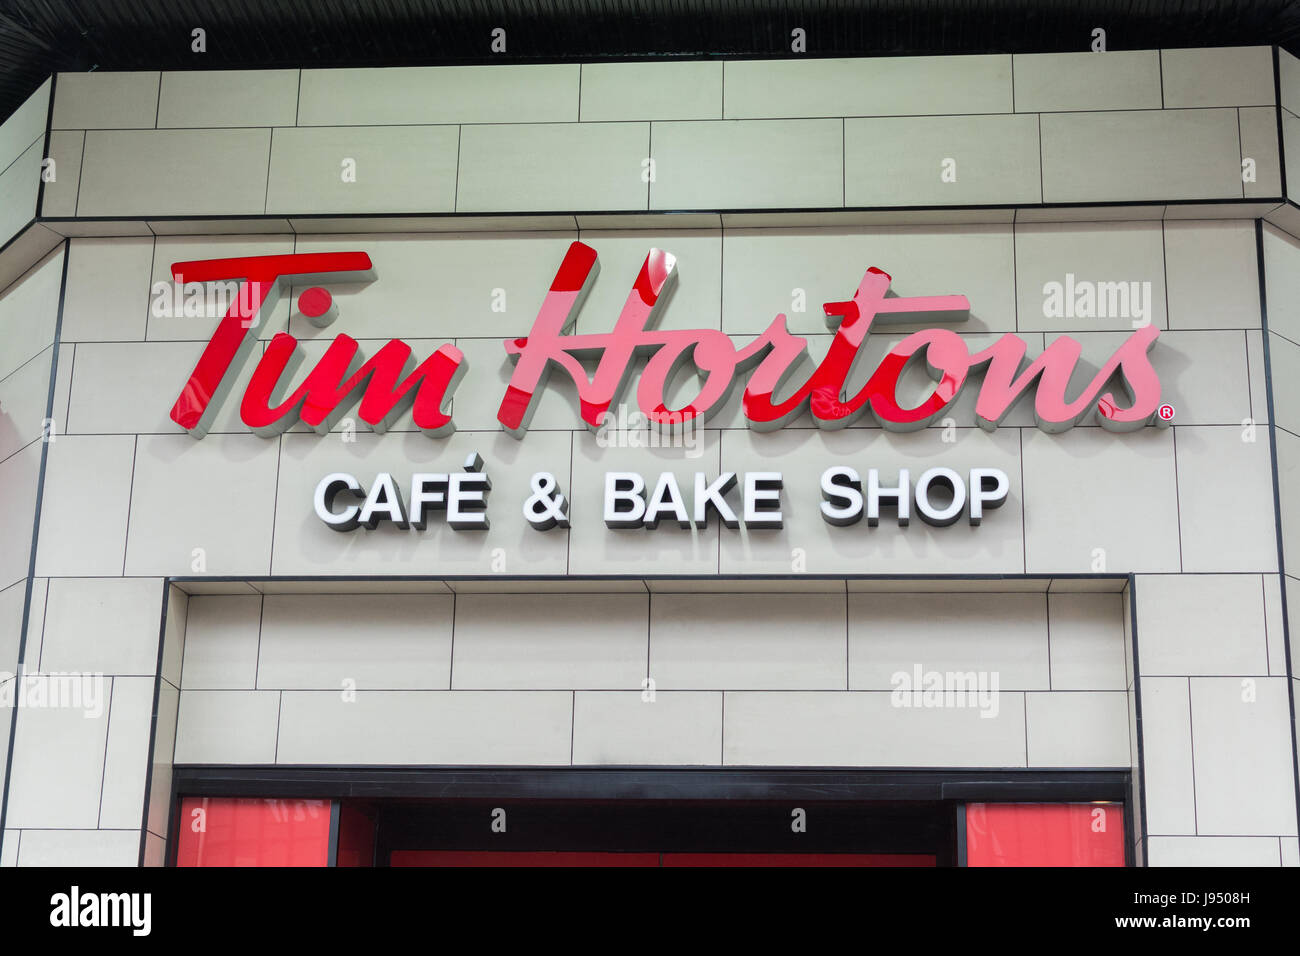 First Look: Tim Hortons Café & Bake Shop